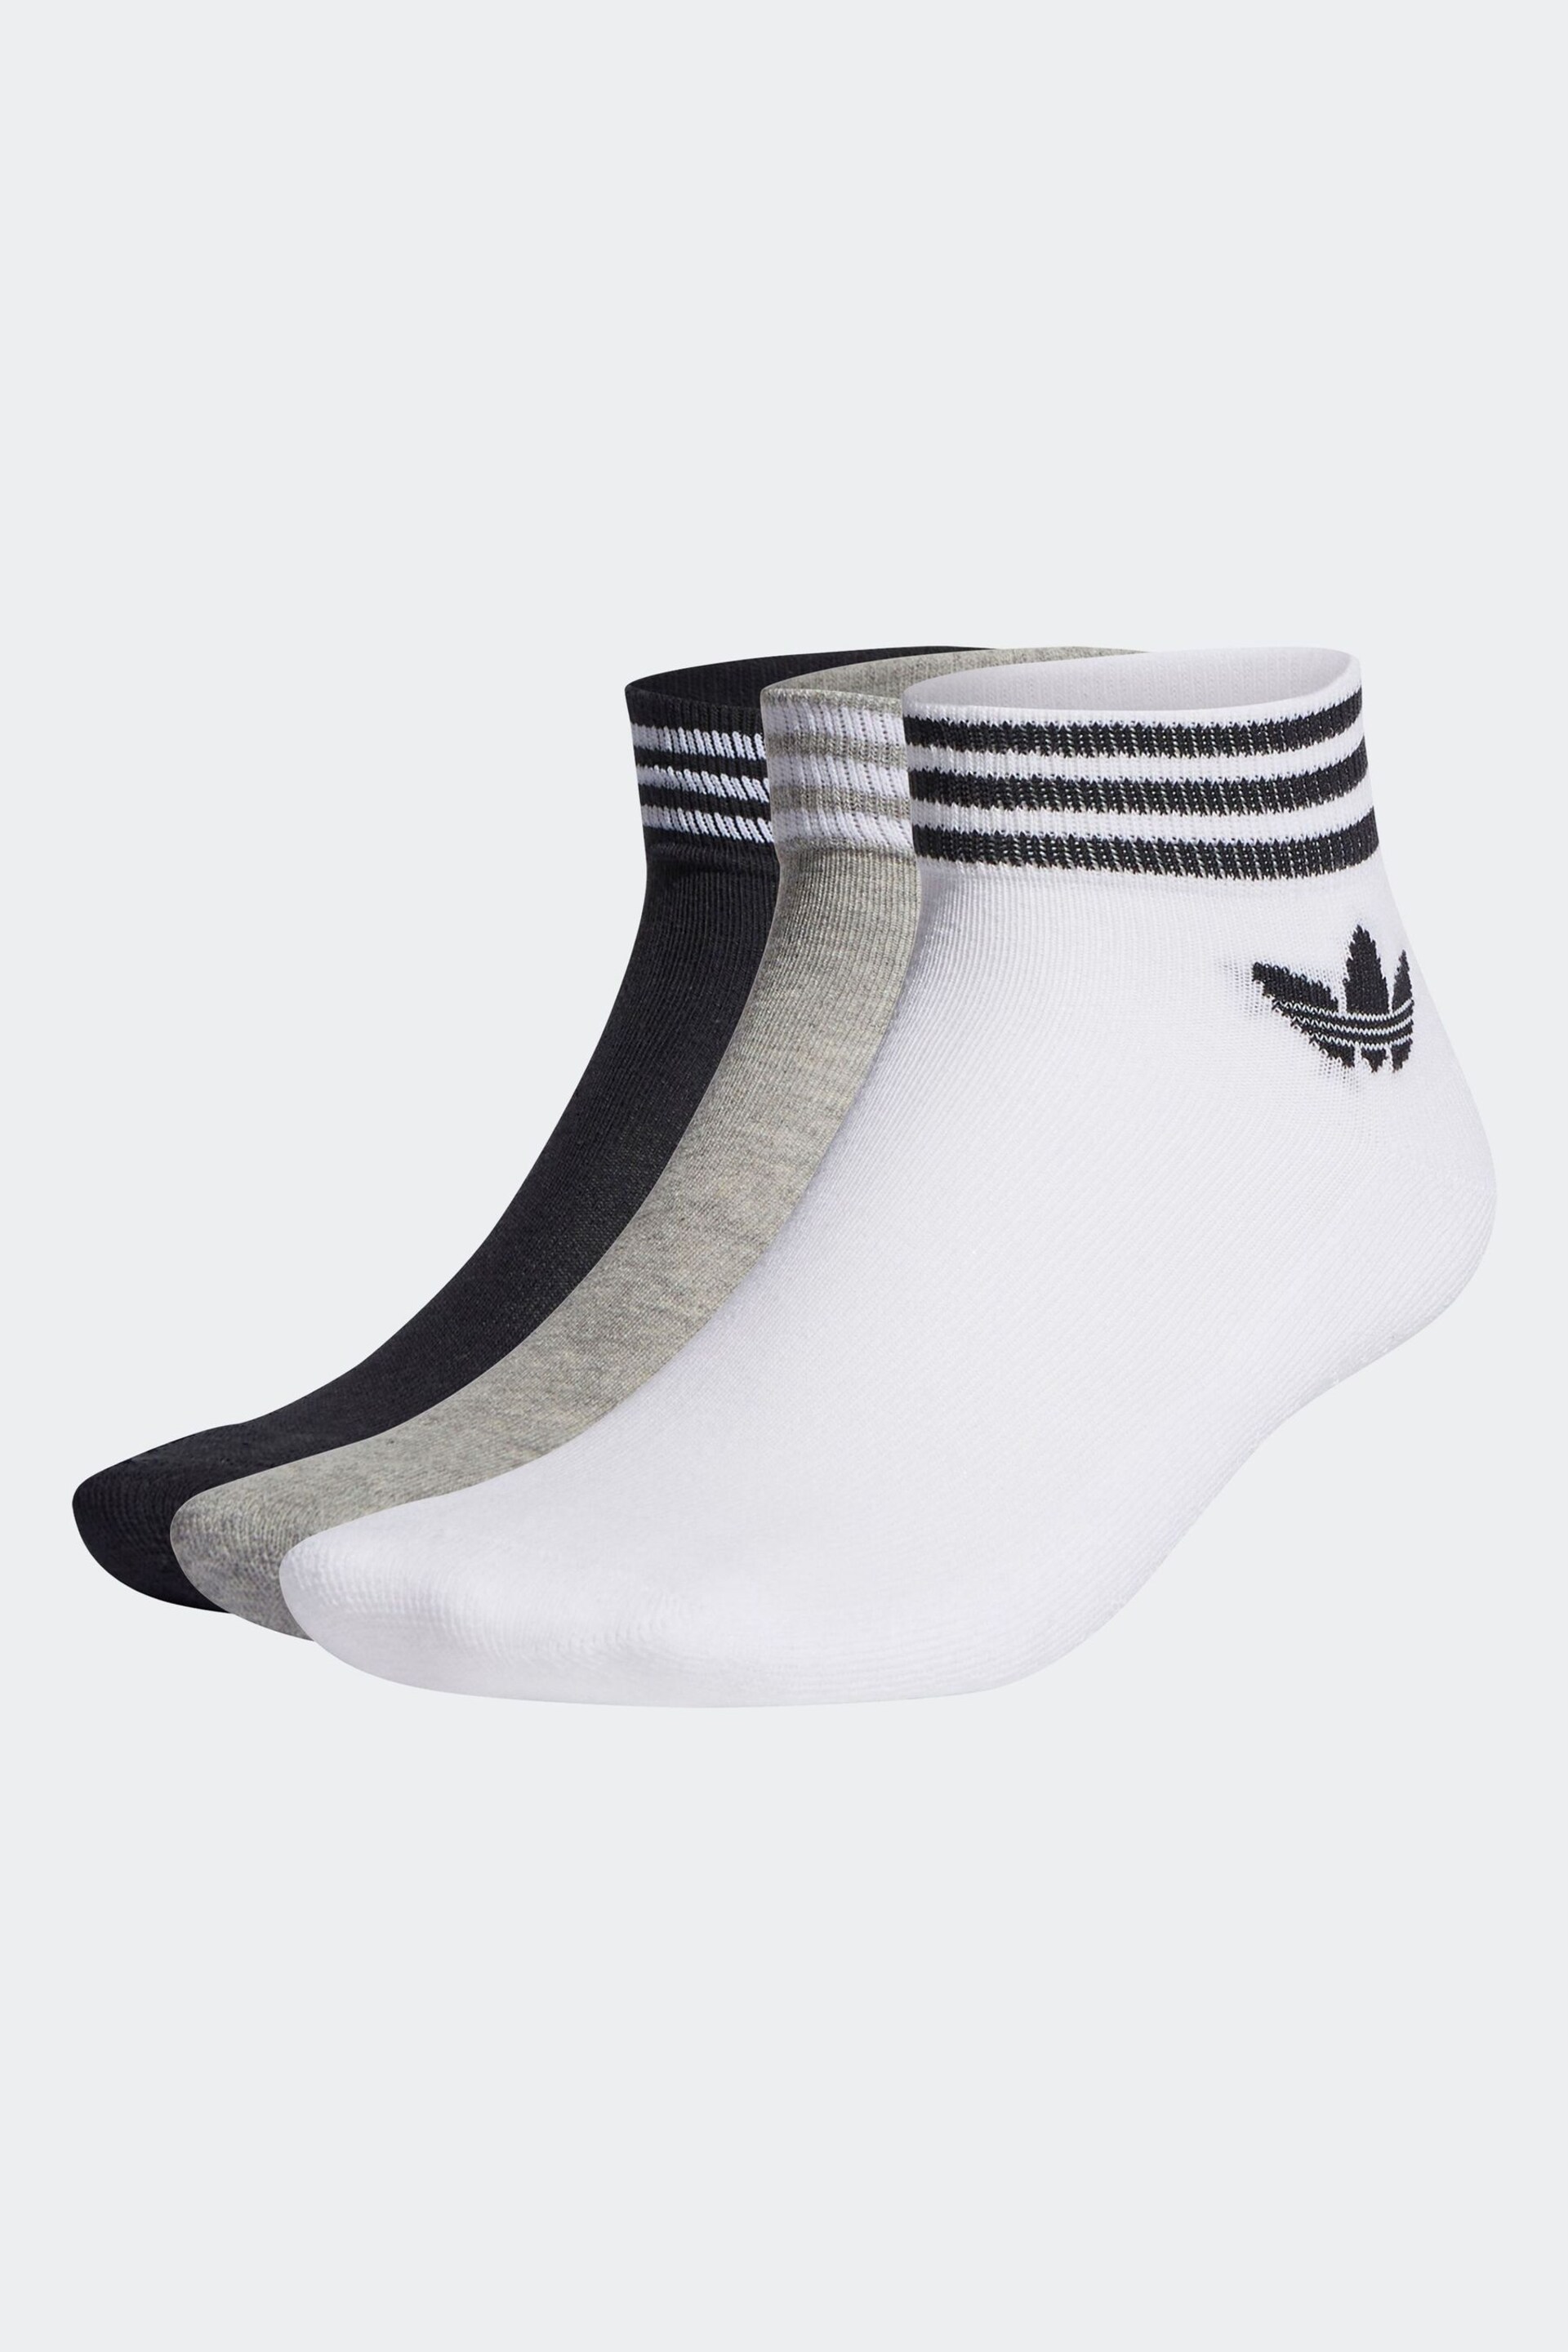 adidas Originals Island Club Trefoil Ankle White Socks 3 Pairs - Image 1 of 1